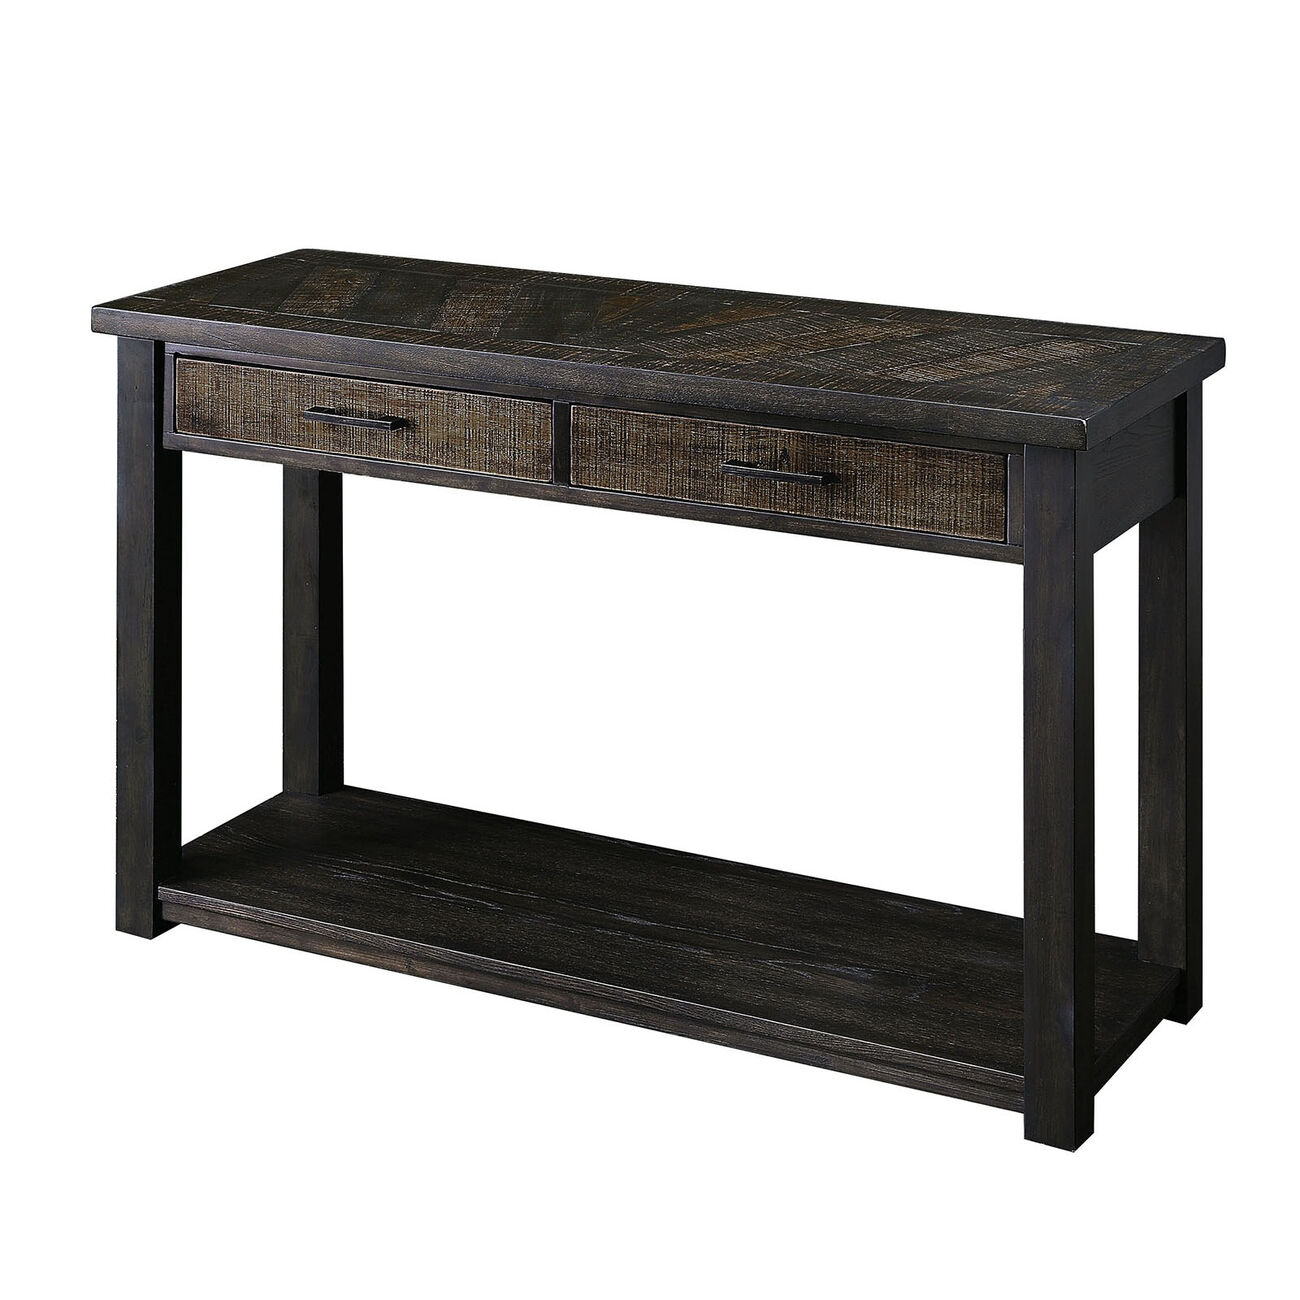 2 Drawer Rustic Style Plank Top Sofa Table with Open Shelf, Dark Oak